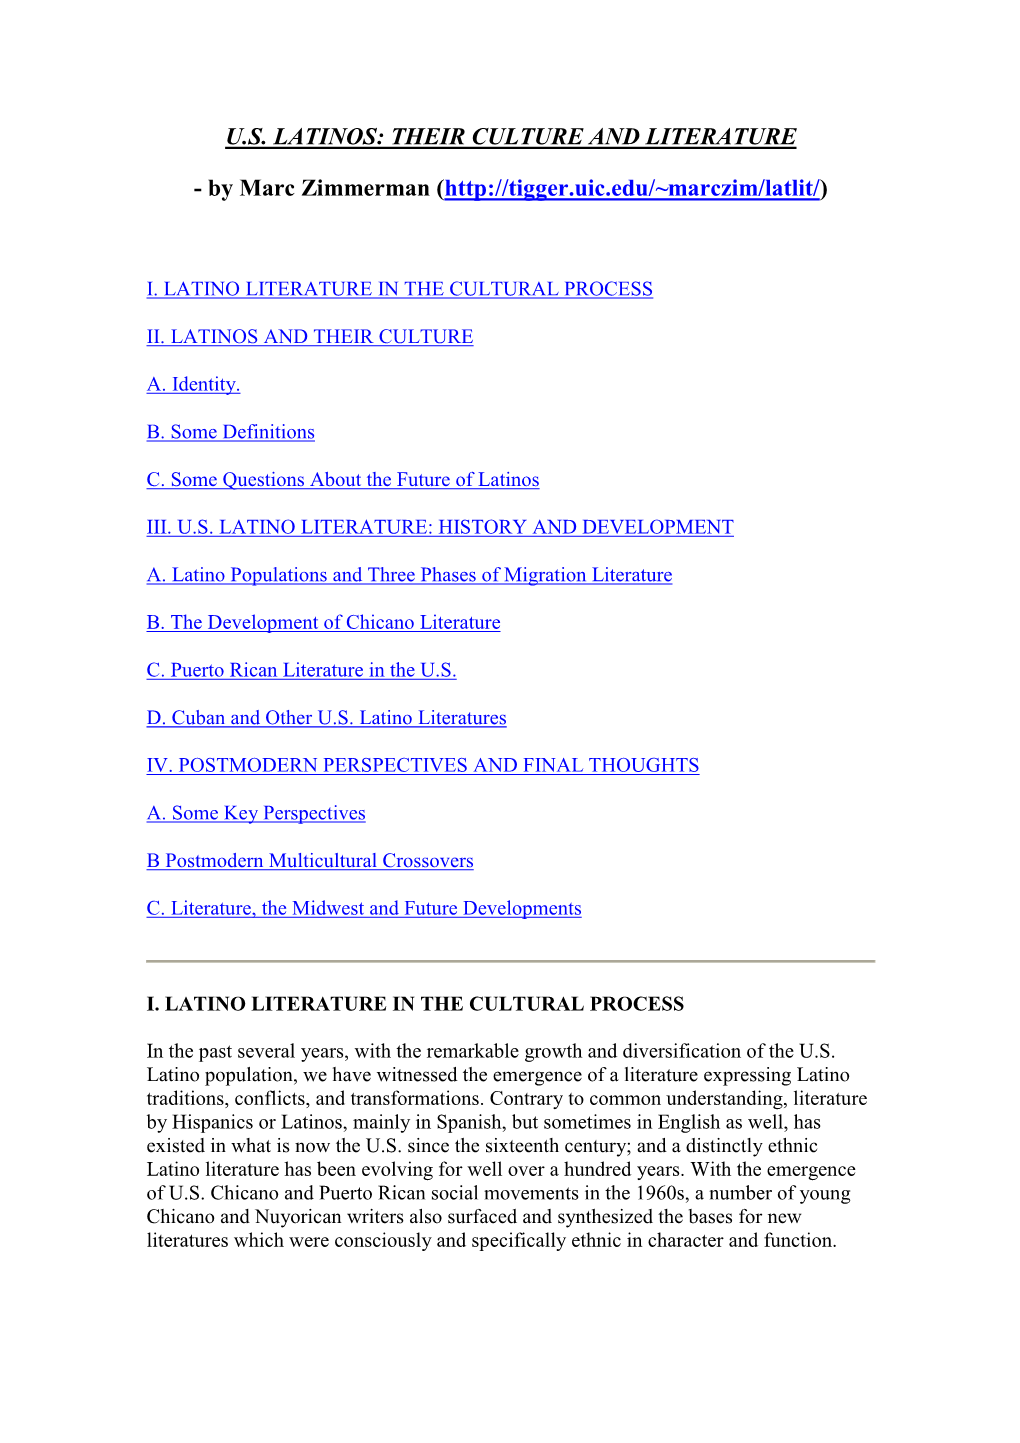 Marc Zimmerman's Bibliography on Latino/A Literature